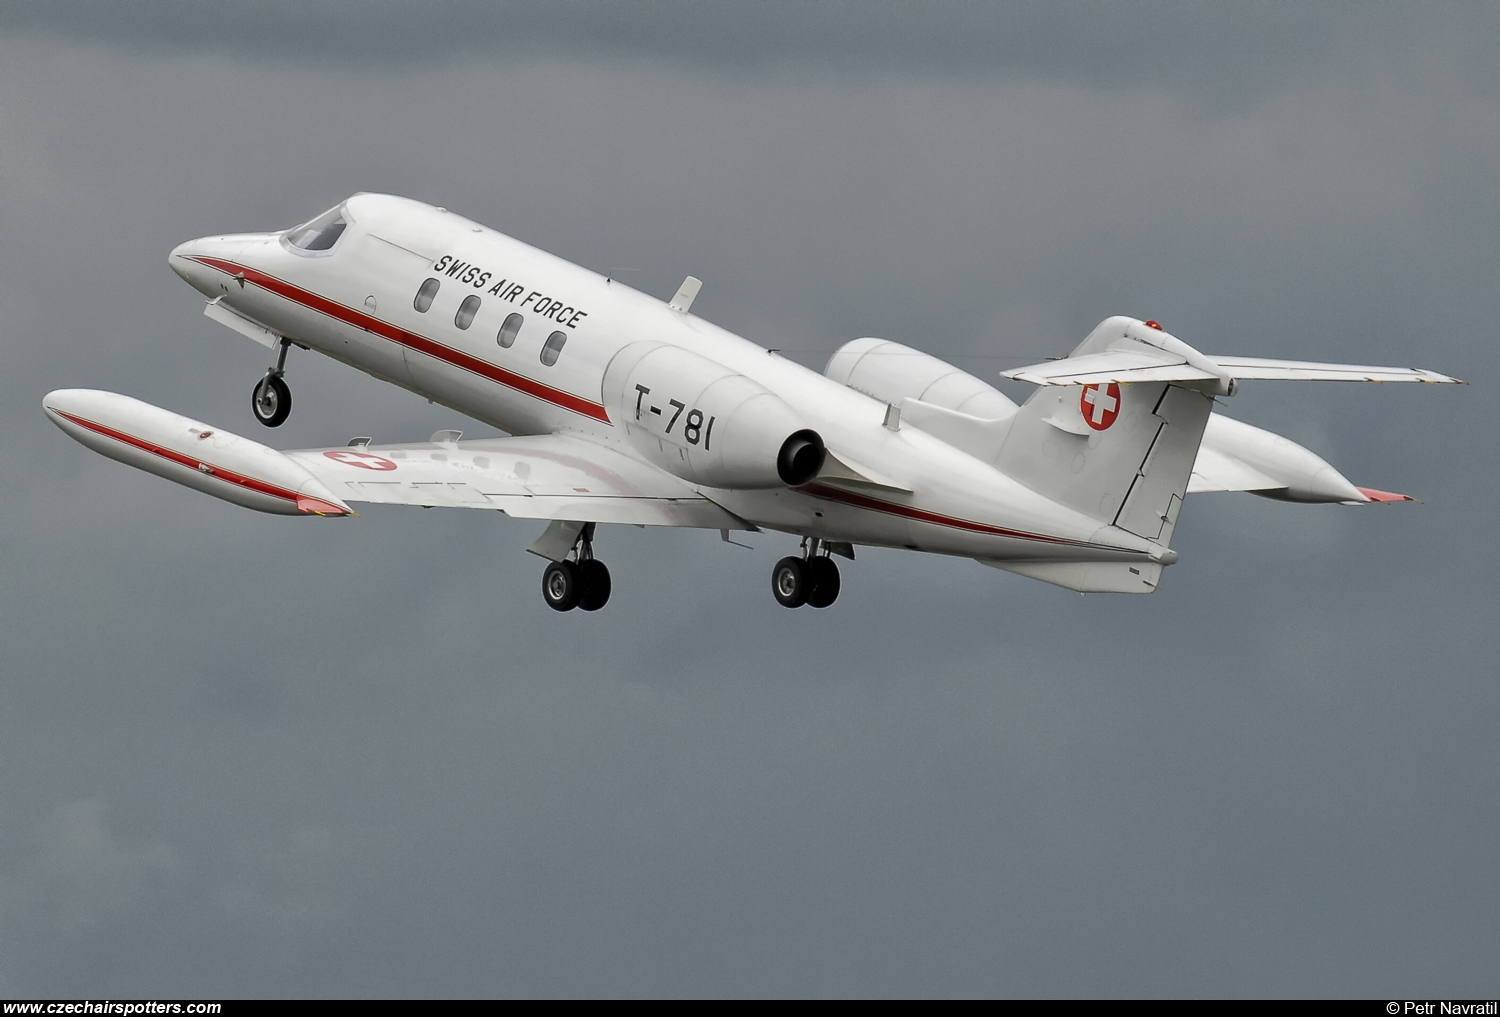 Switzerland - Air Force – Bombardier Gates Learjet 35A T-781